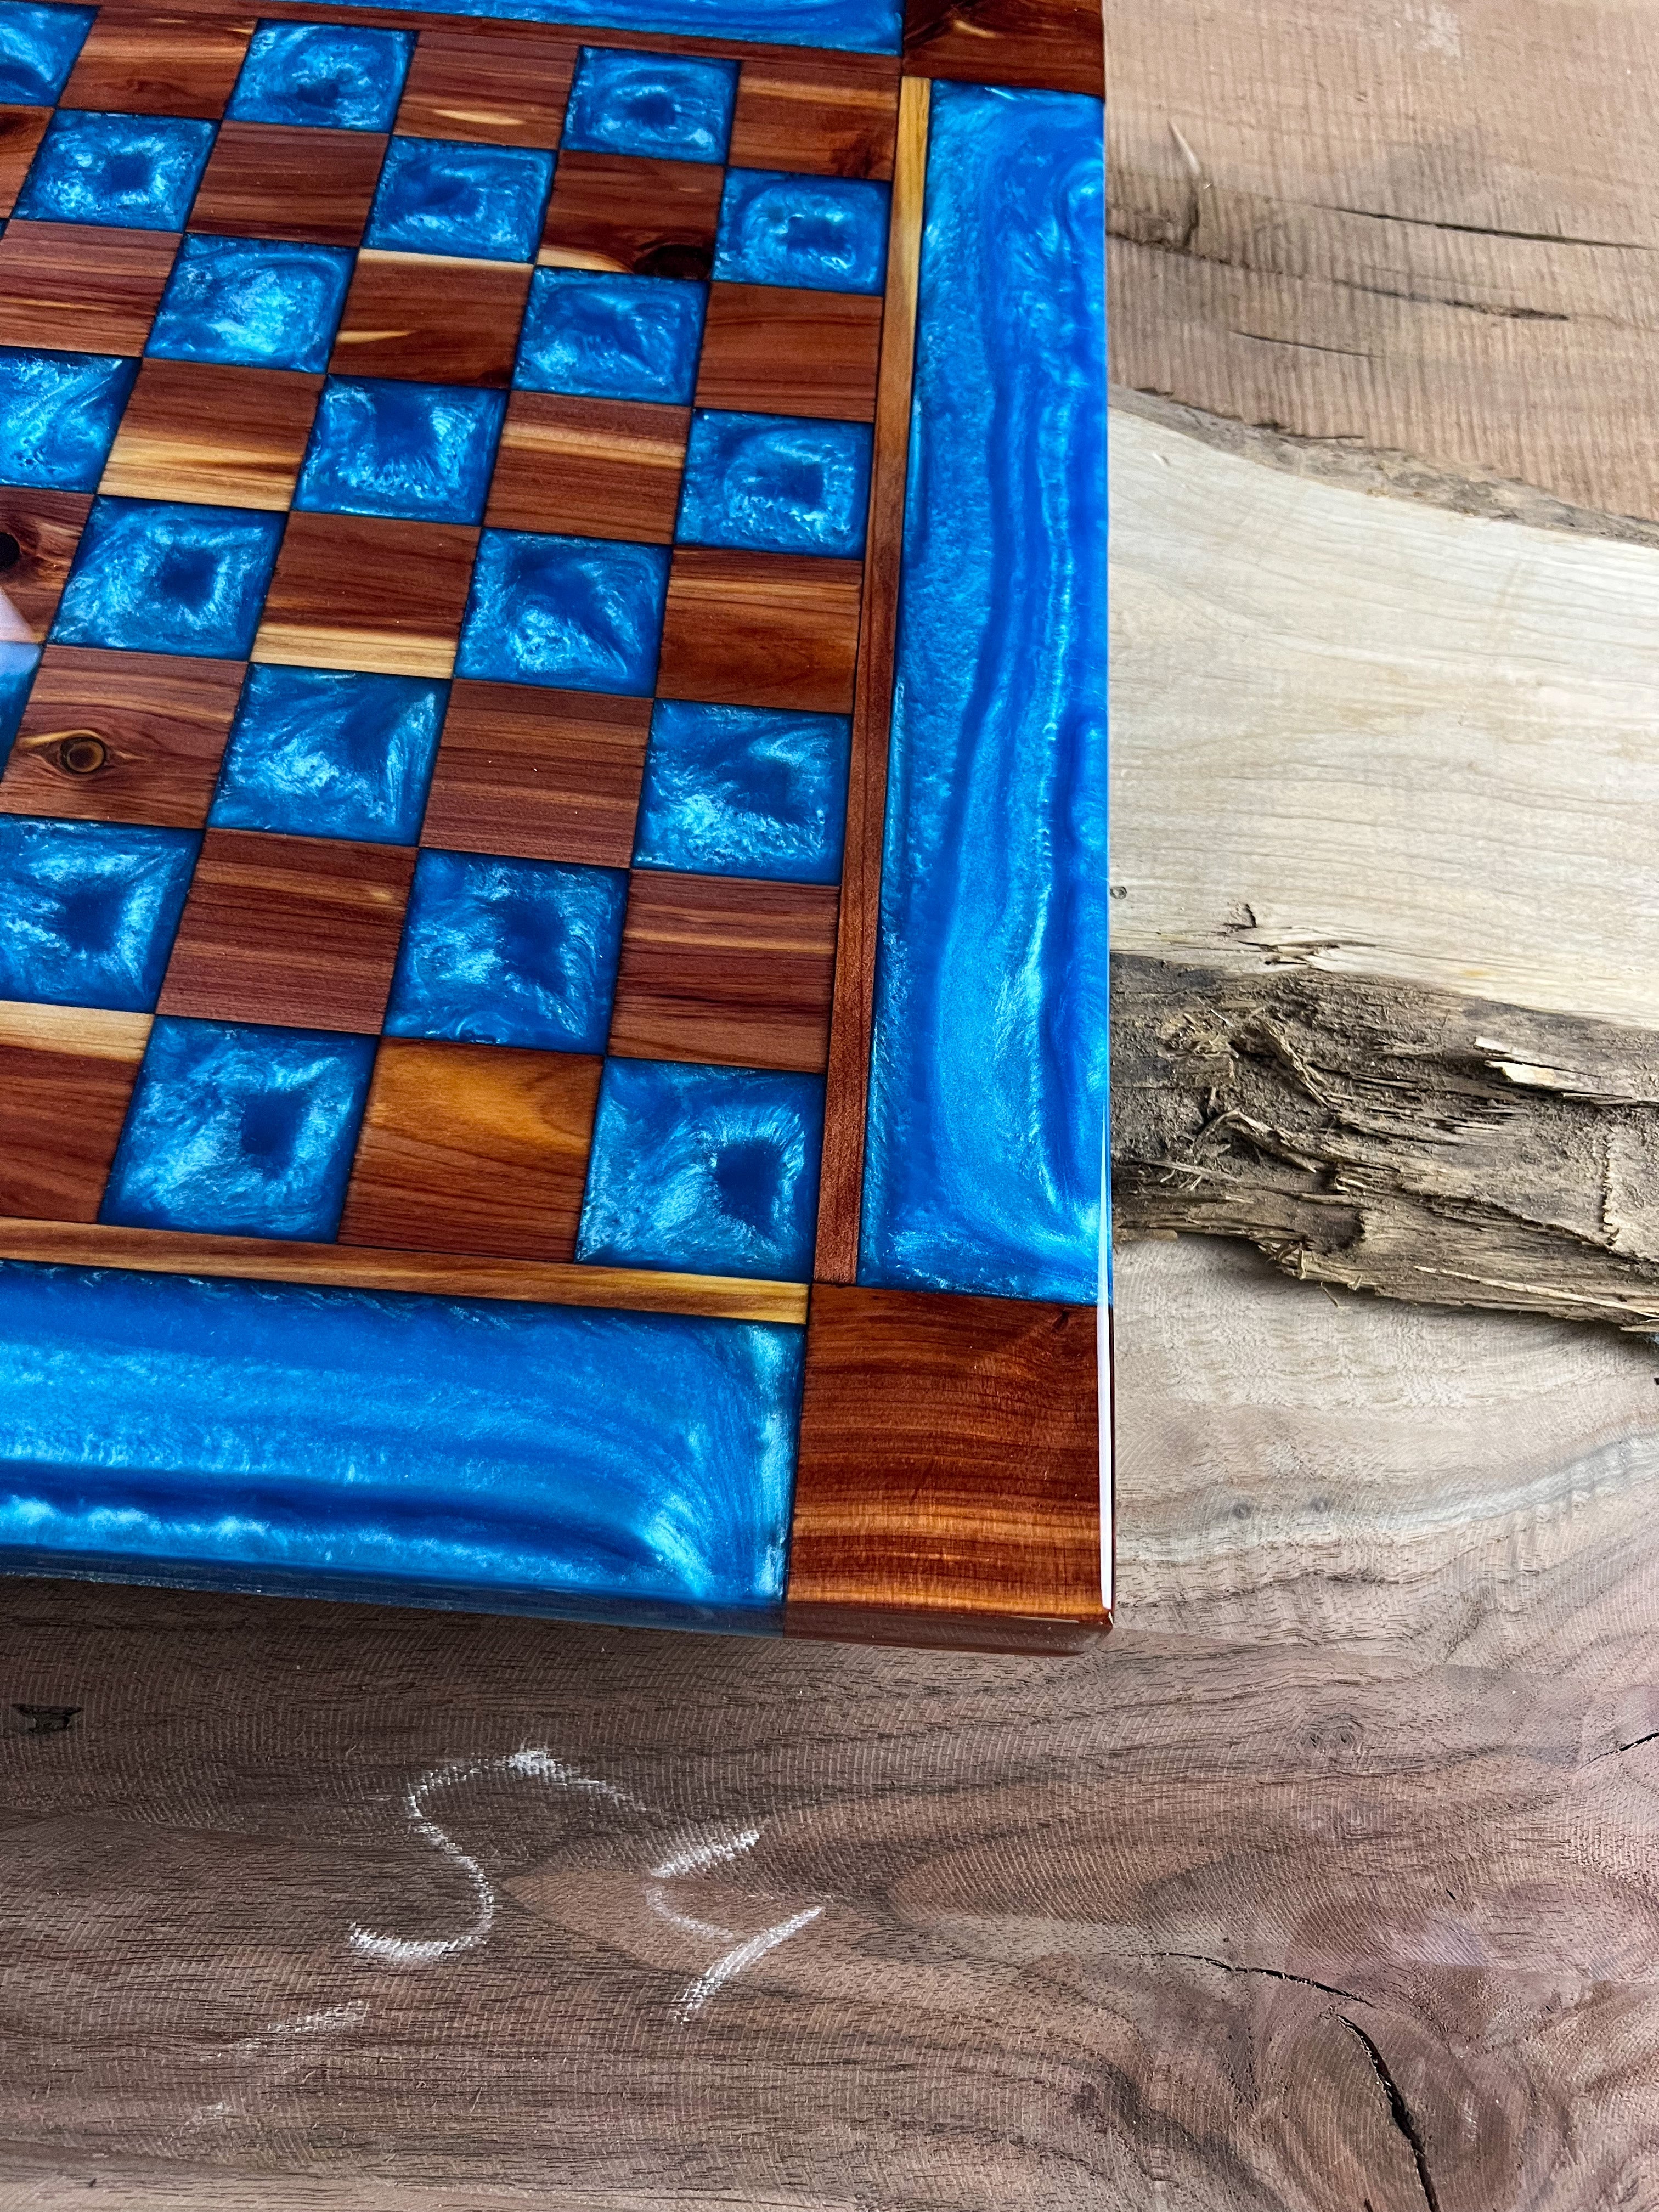 Caribbean Blue Cedar Chess Board (With Border)